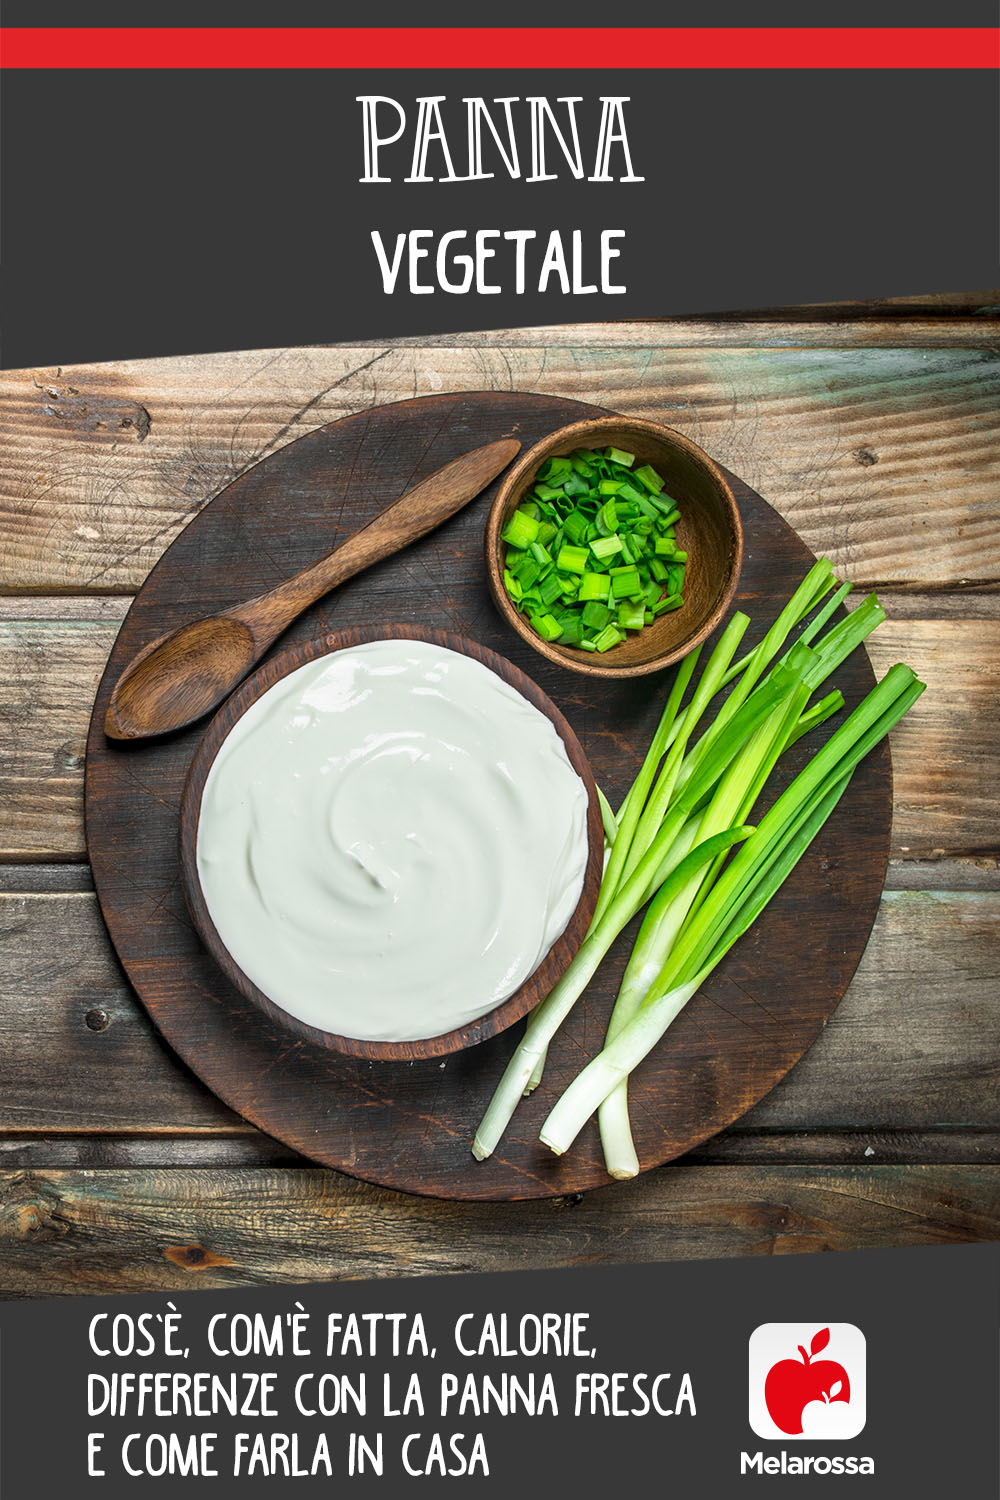 panna vegetale: cos'è, benefici, usi in cucina e come prepararla a casa